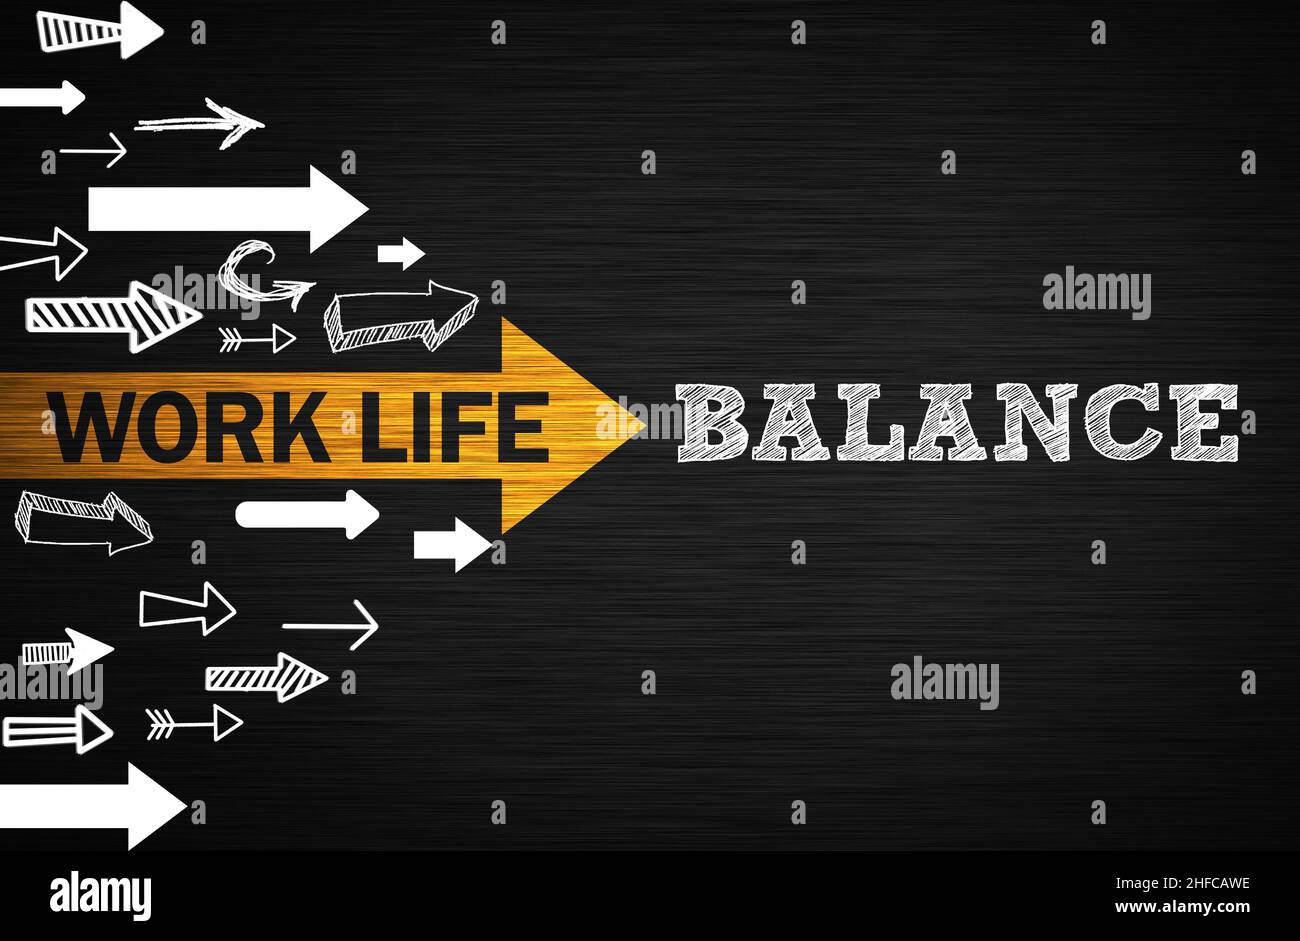 Work Life Balance - information illustration Stock Photo